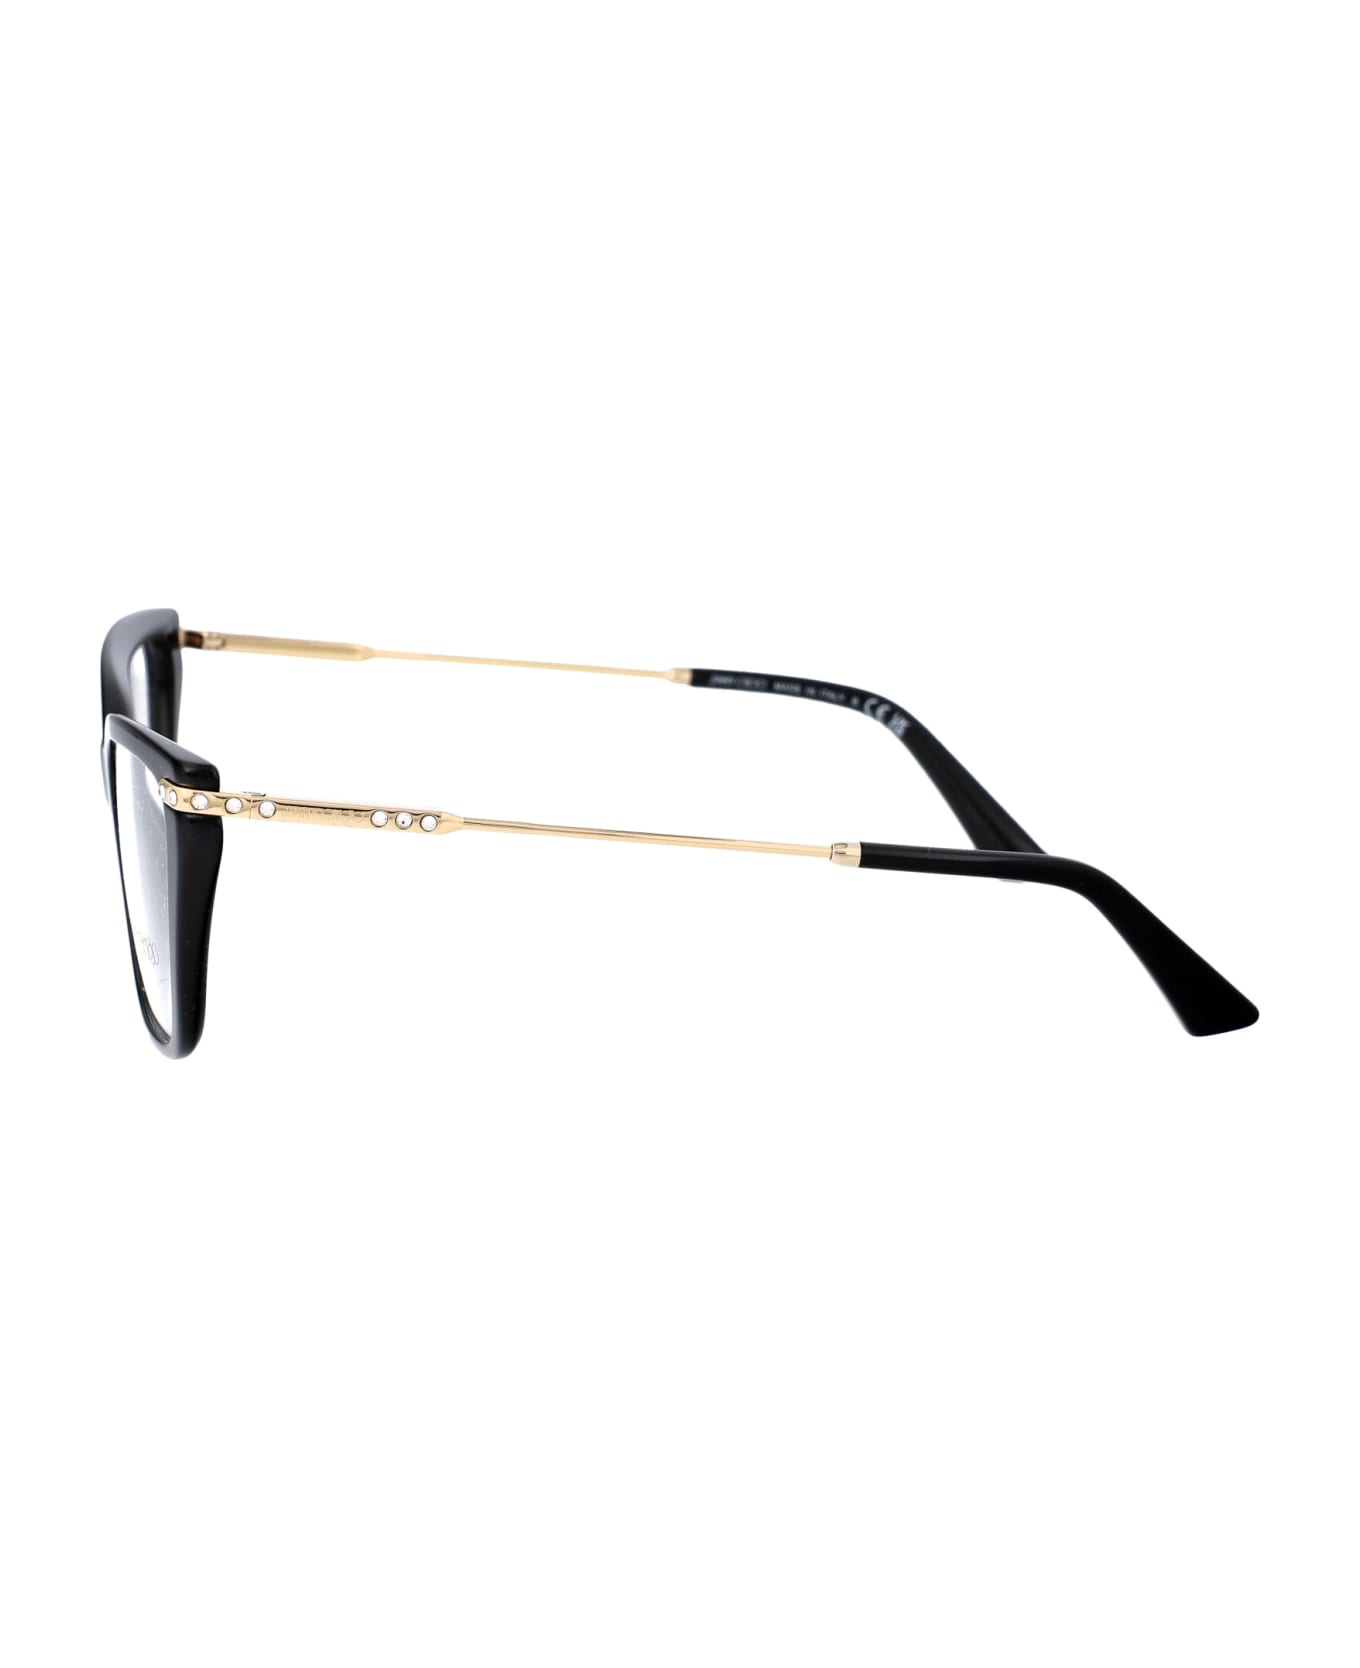 Jimmy Choo Eyewear 0jc3002b Glasses - 5000 Black